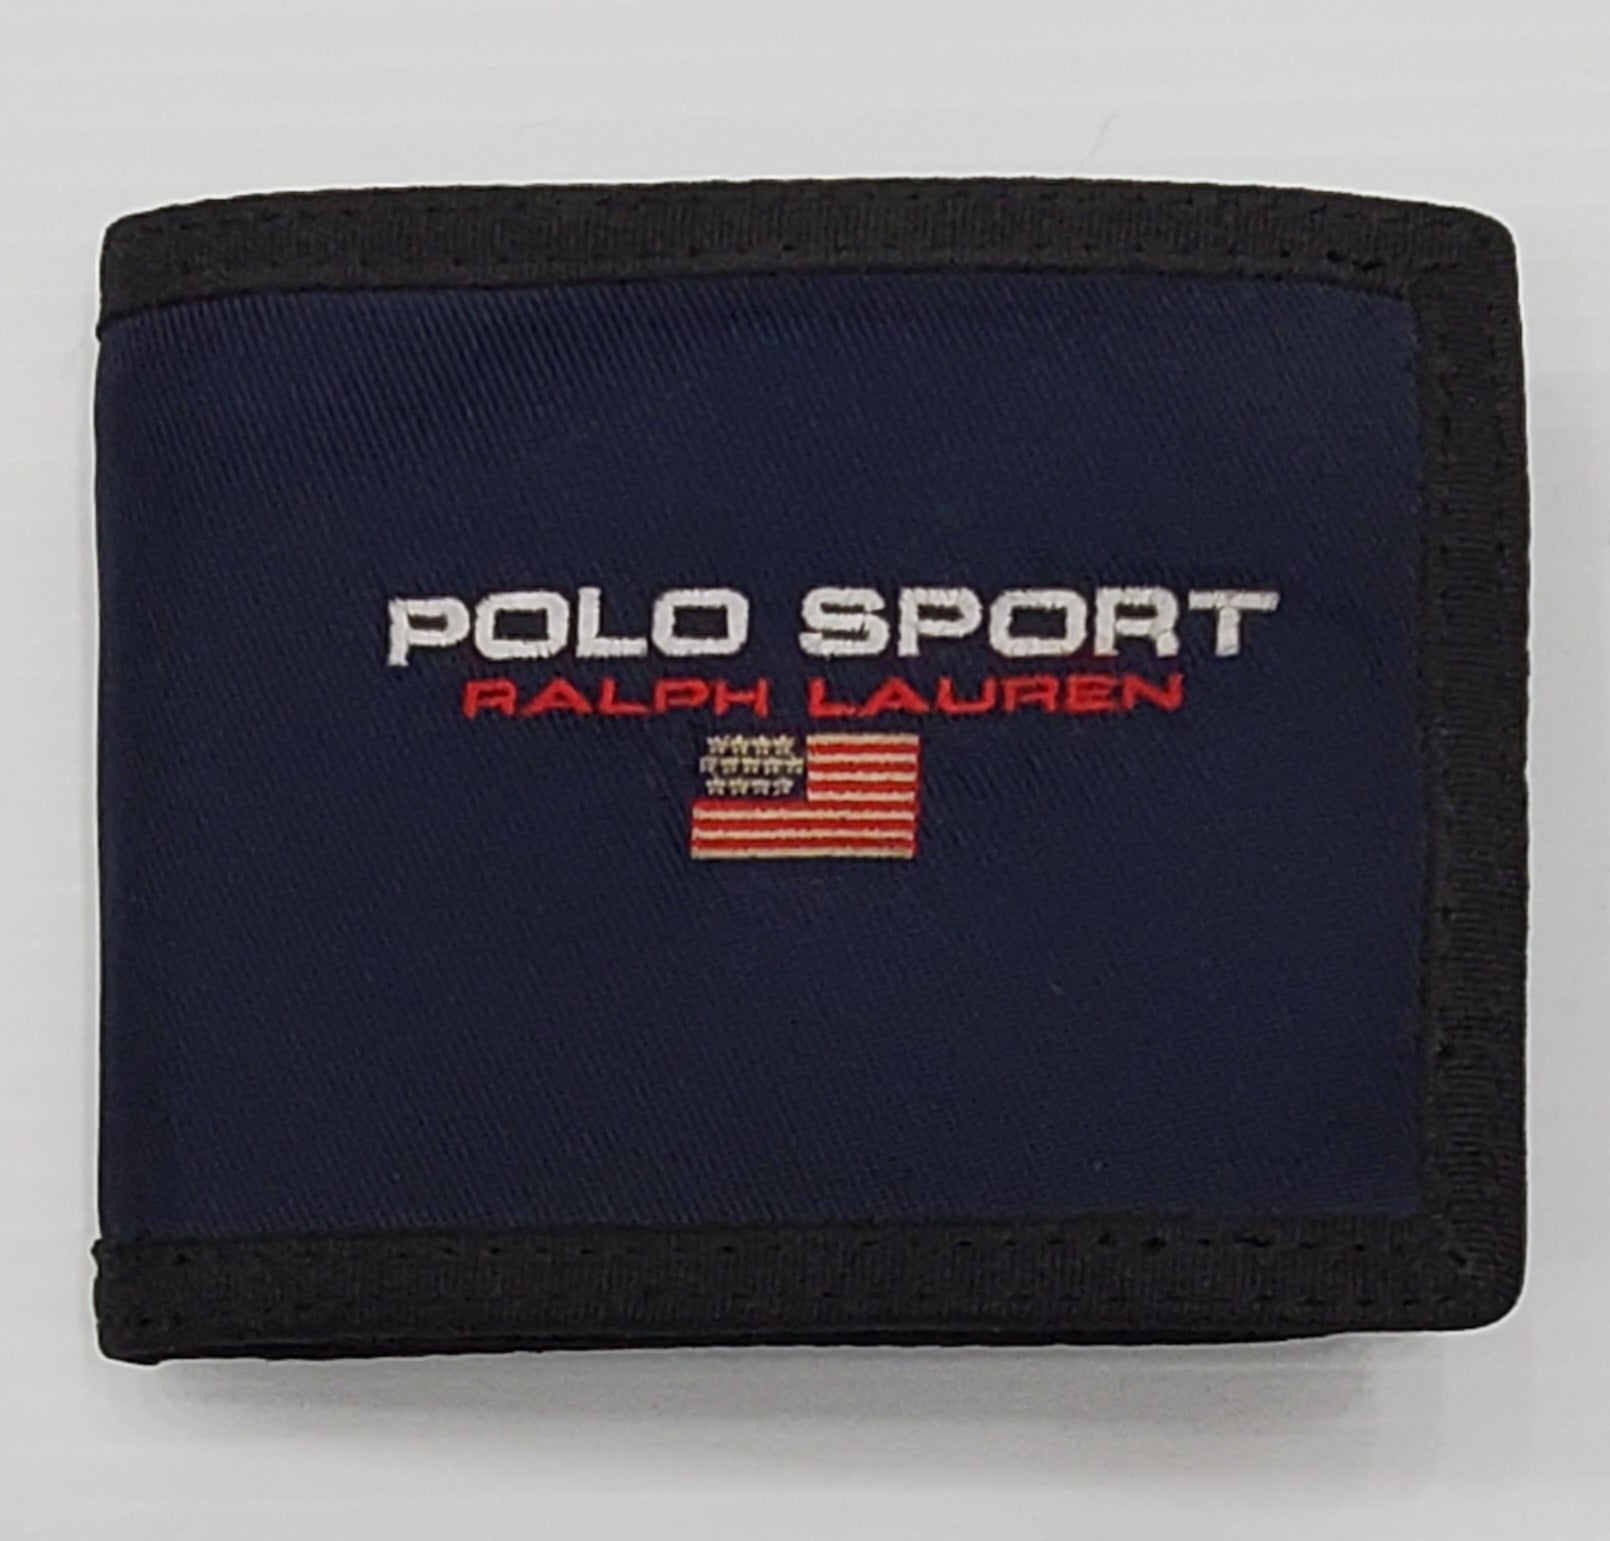 Nwt Polo Ralph Lauren Polo Sport Nylon Wallet